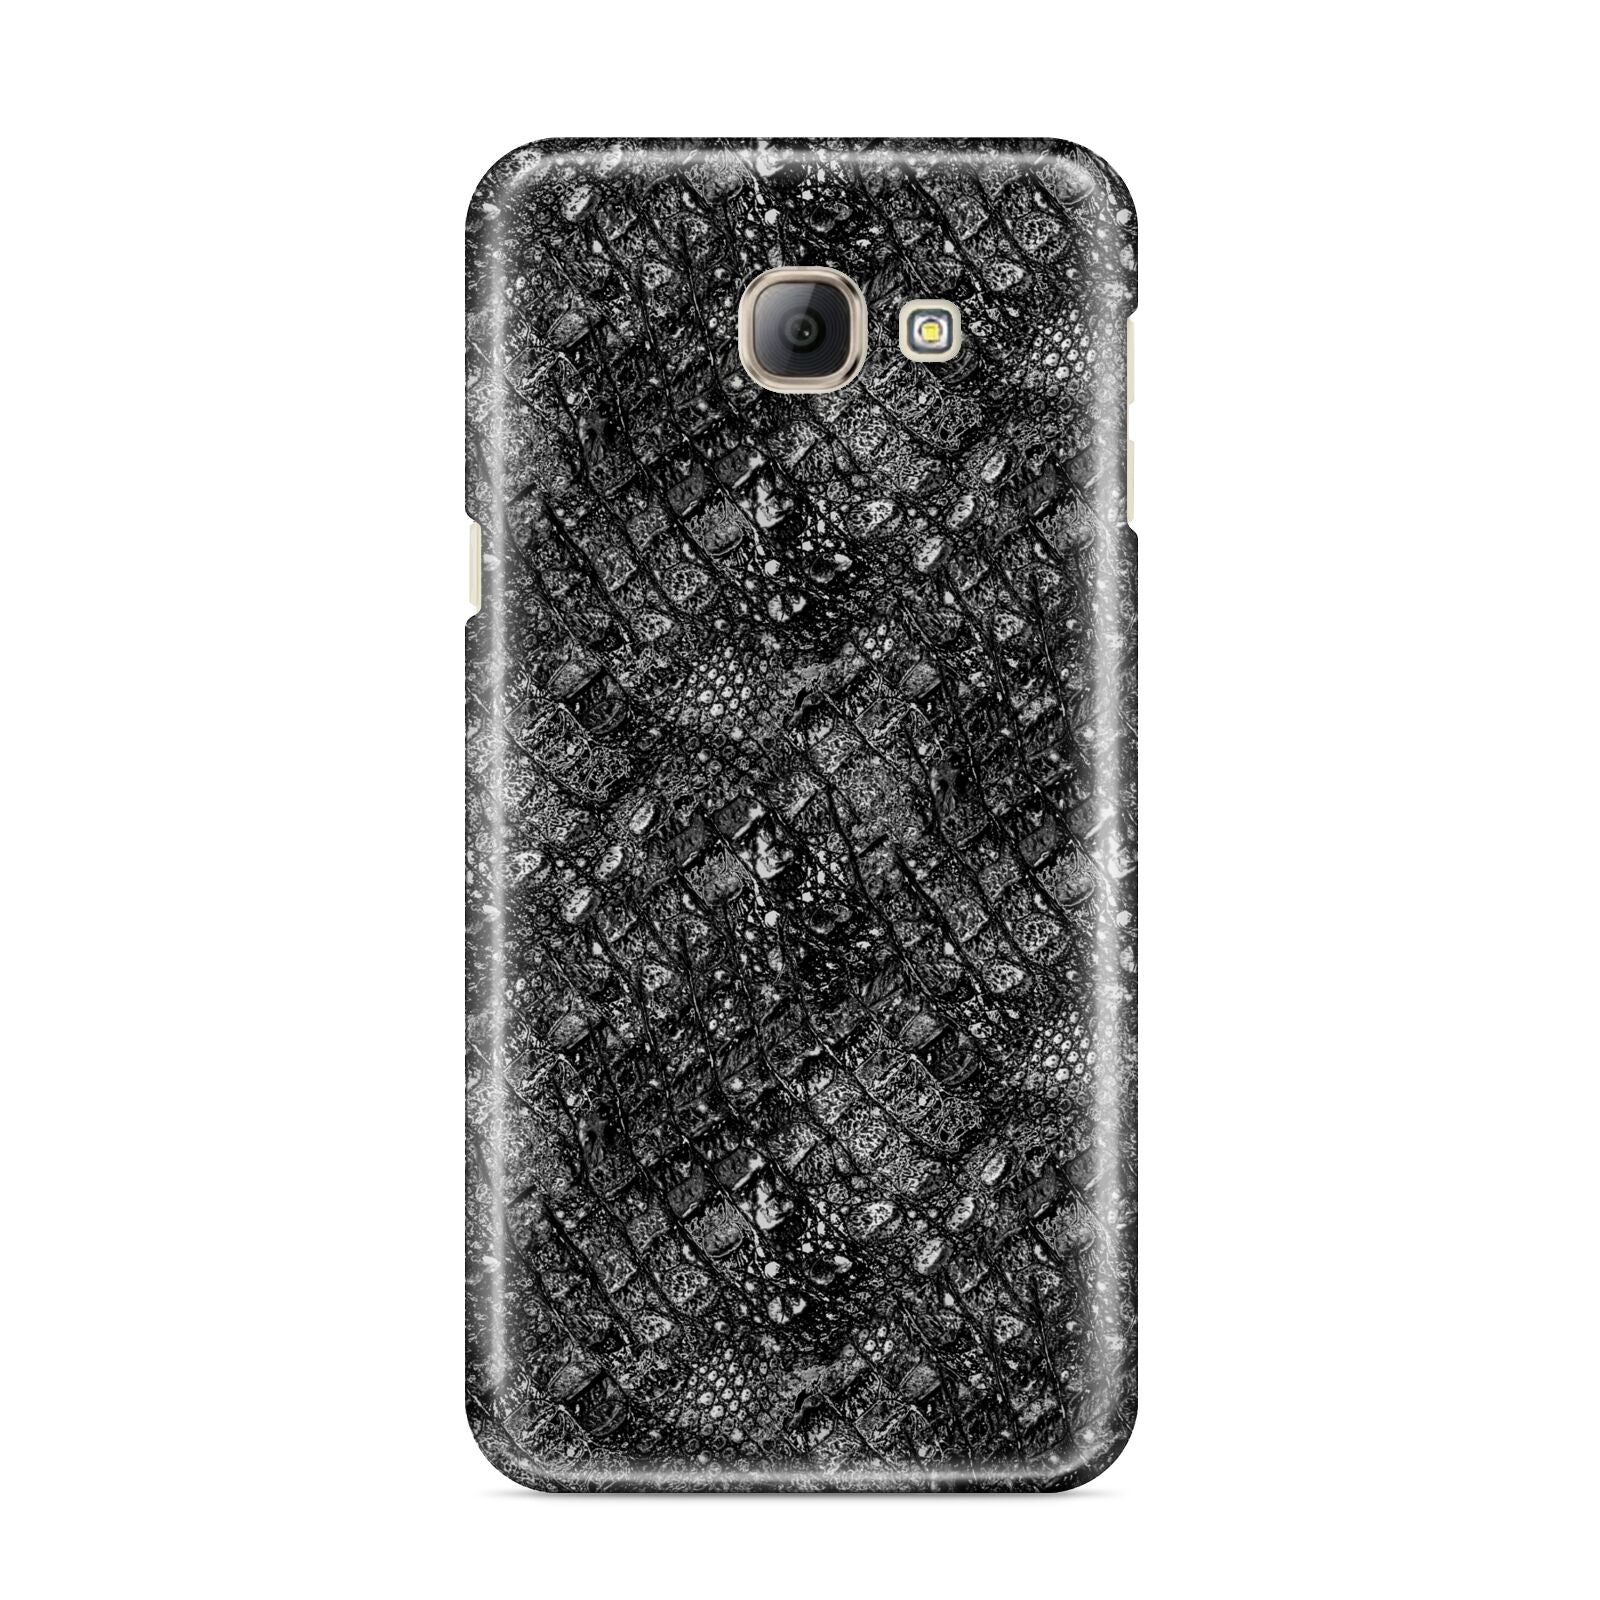 Snakeskin Design Samsung Galaxy A8 2016 Case